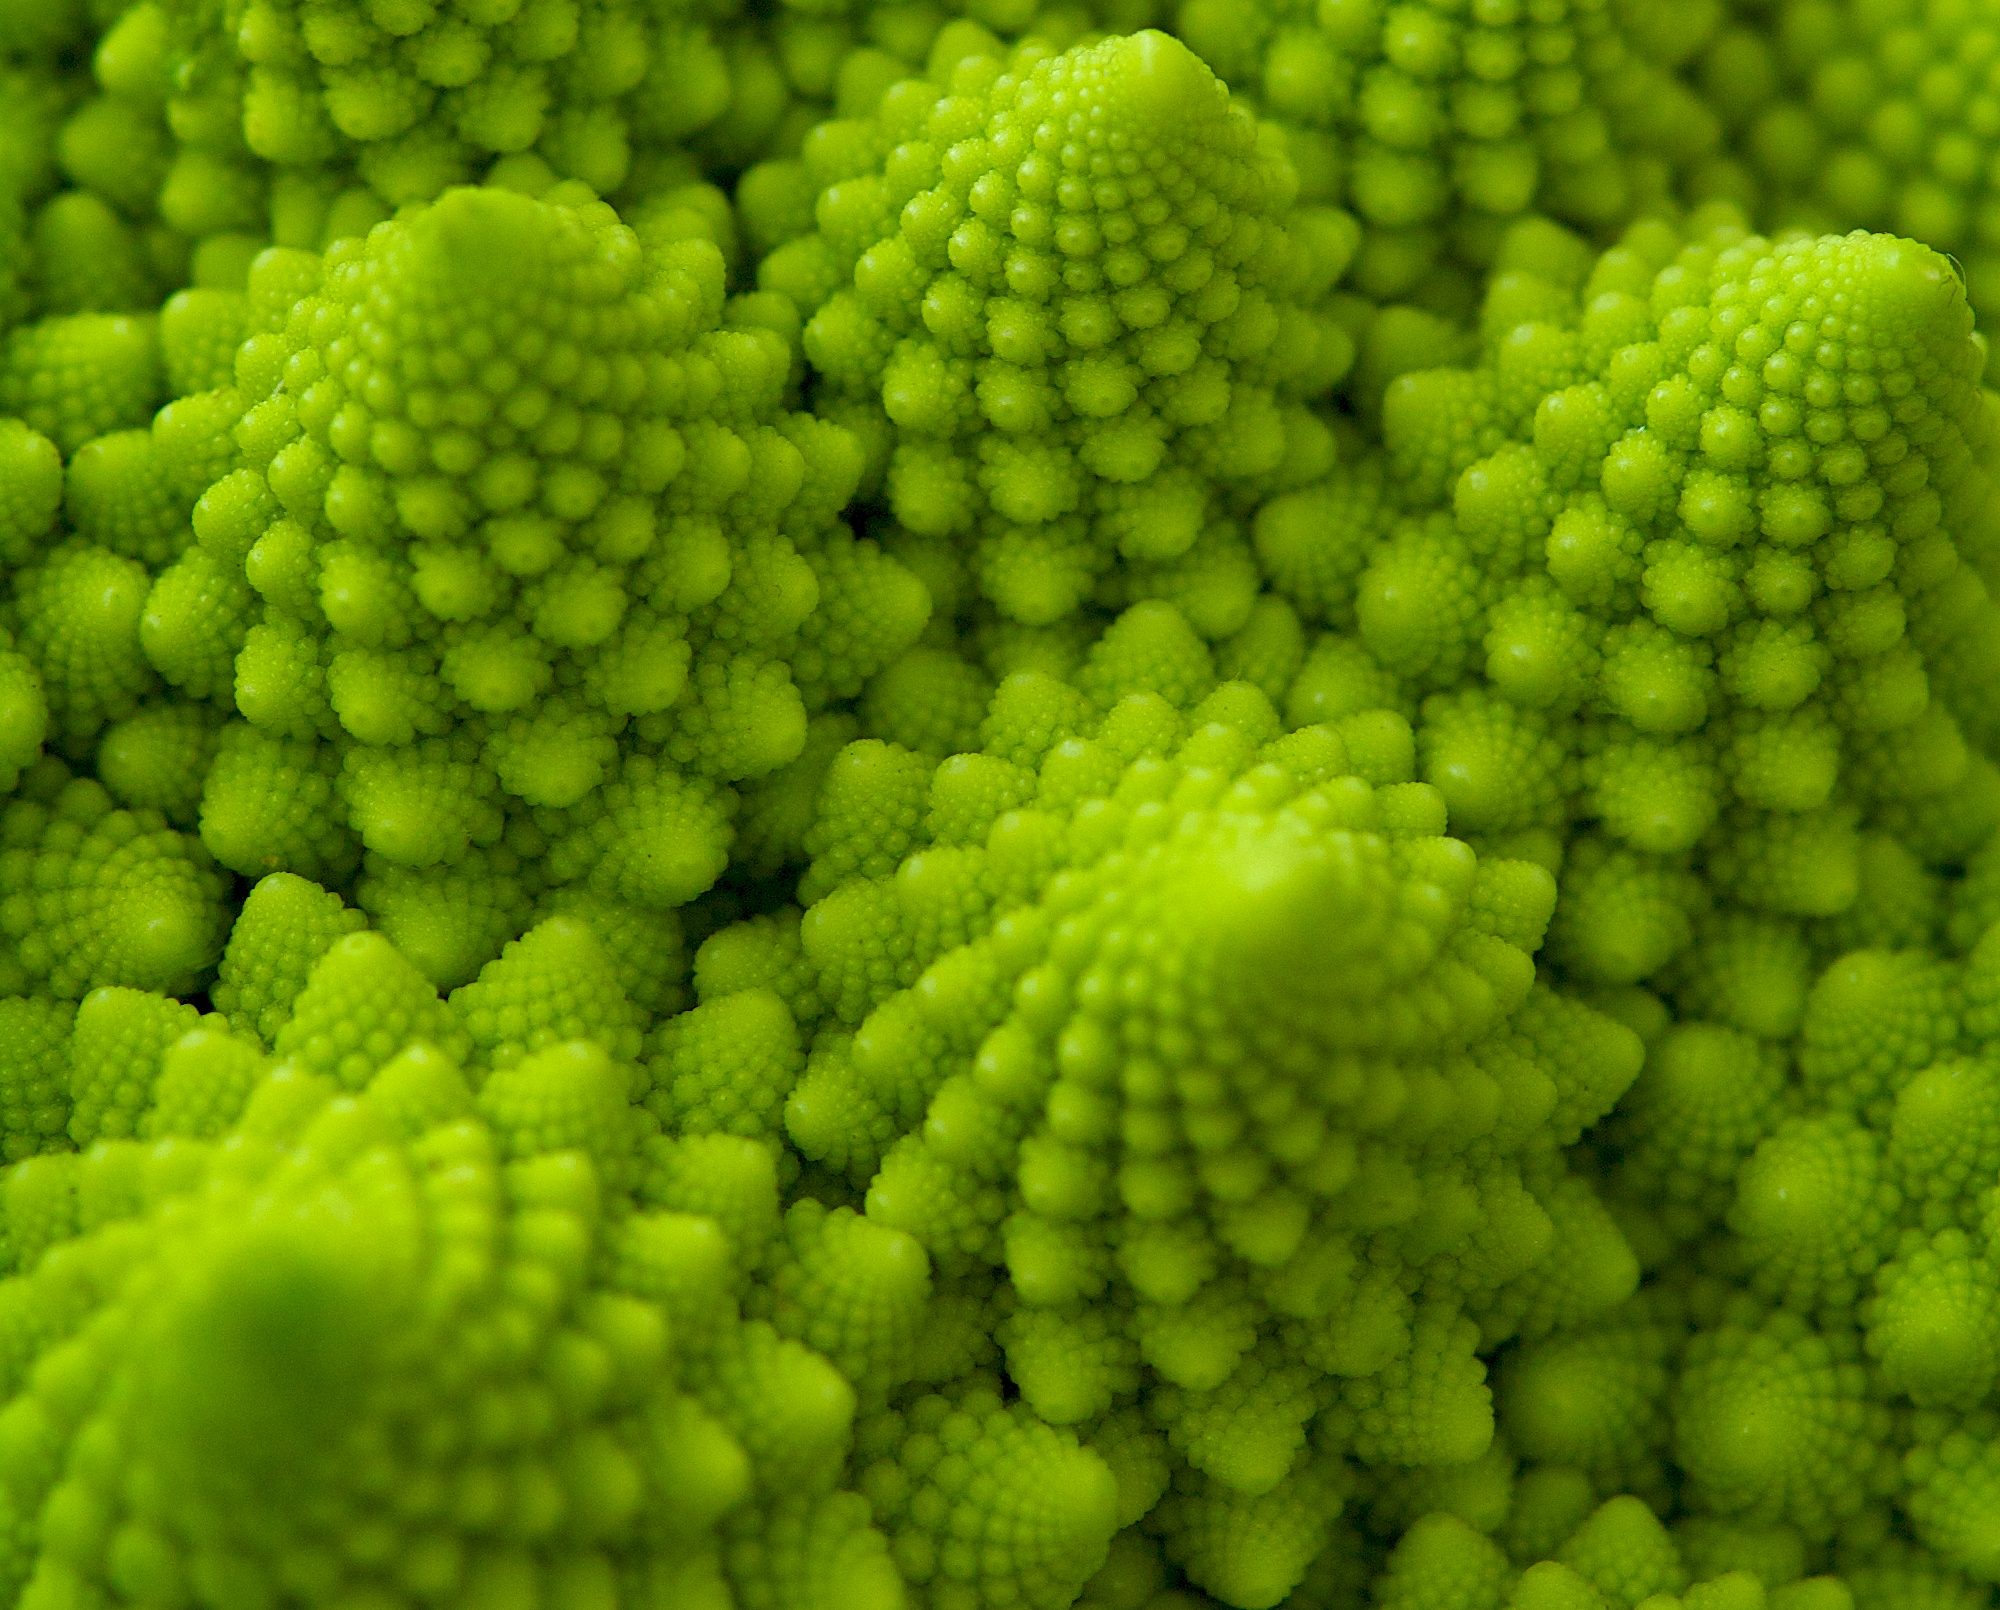 fractals_in_broccoli_Flickr